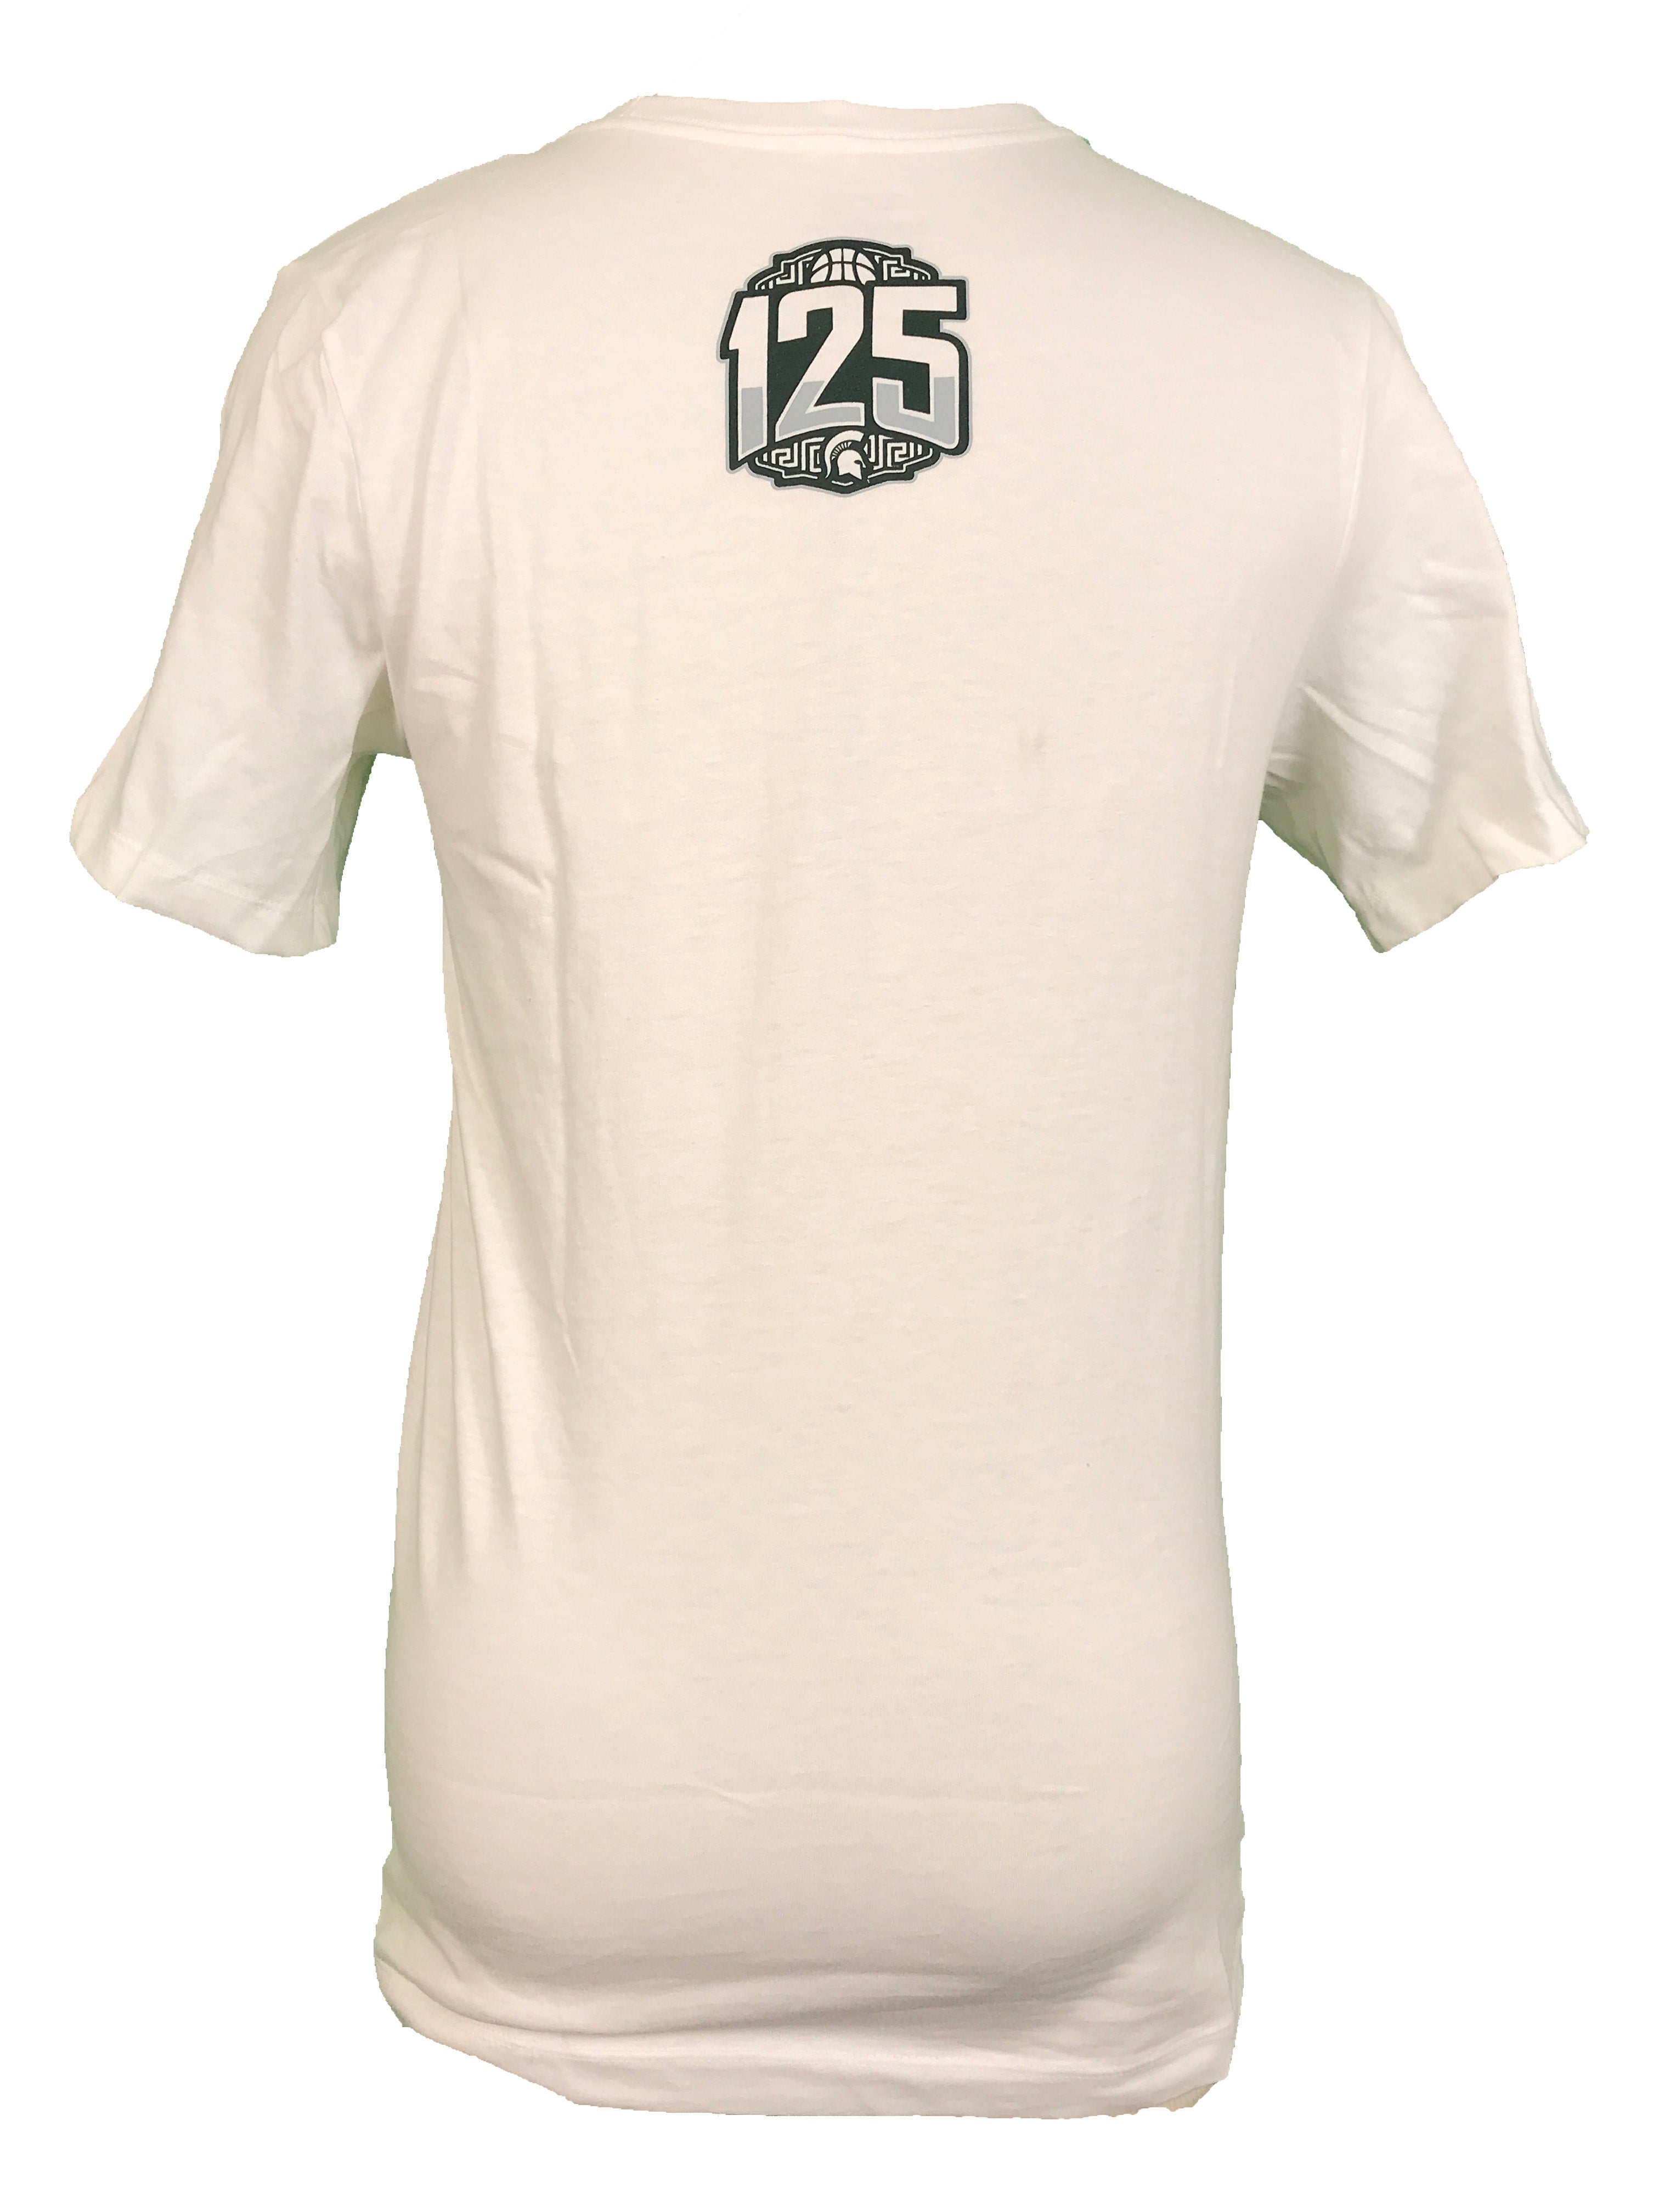 Nike White 2023 The Izzone MSU Basketball T-Shirt Men's Size S